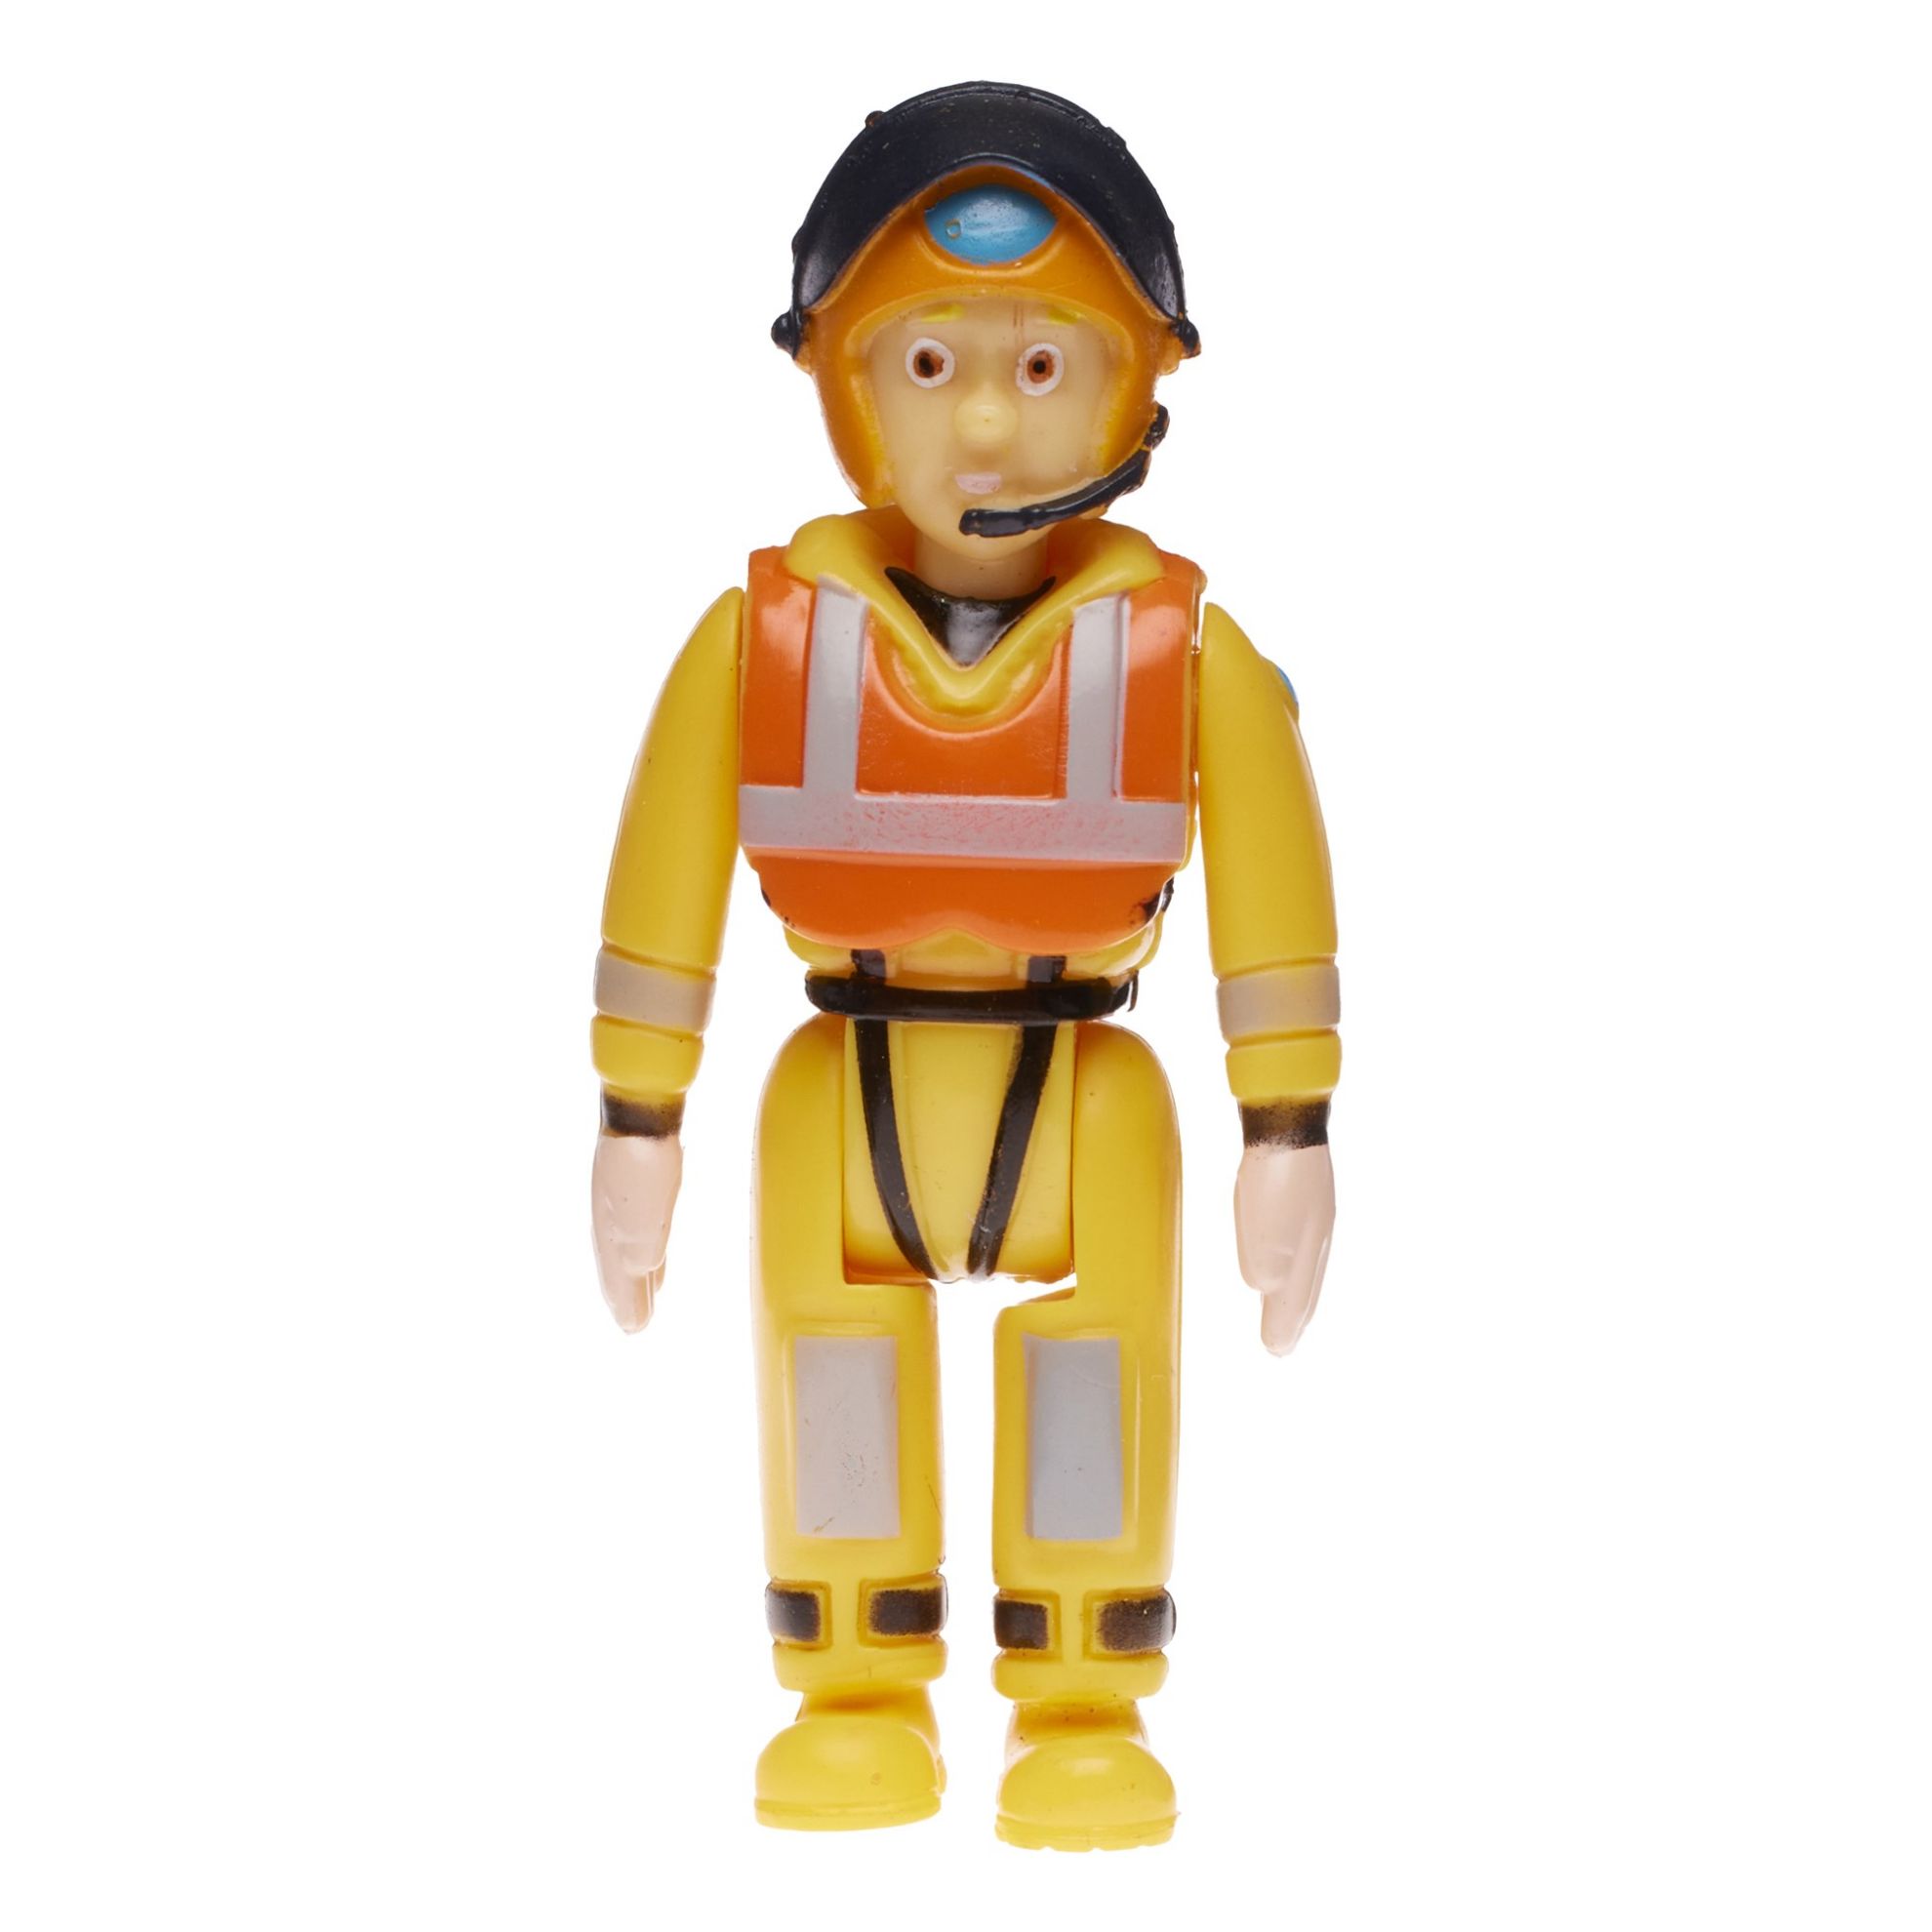 Spare Parts - Fireman Sam 2 Figure Pack - Pilot Tom